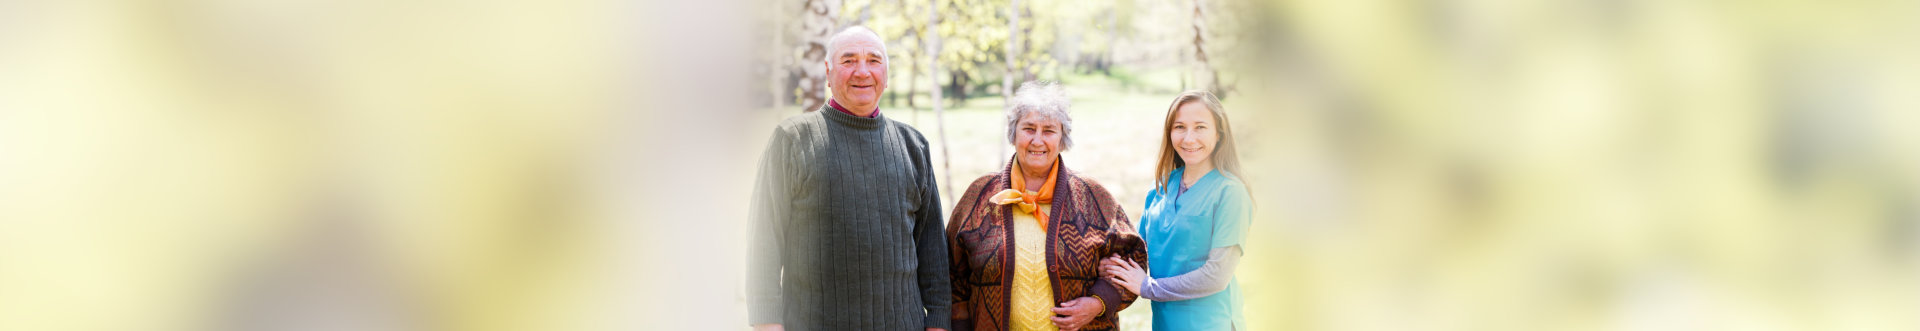 senior patients and caregiver smiling